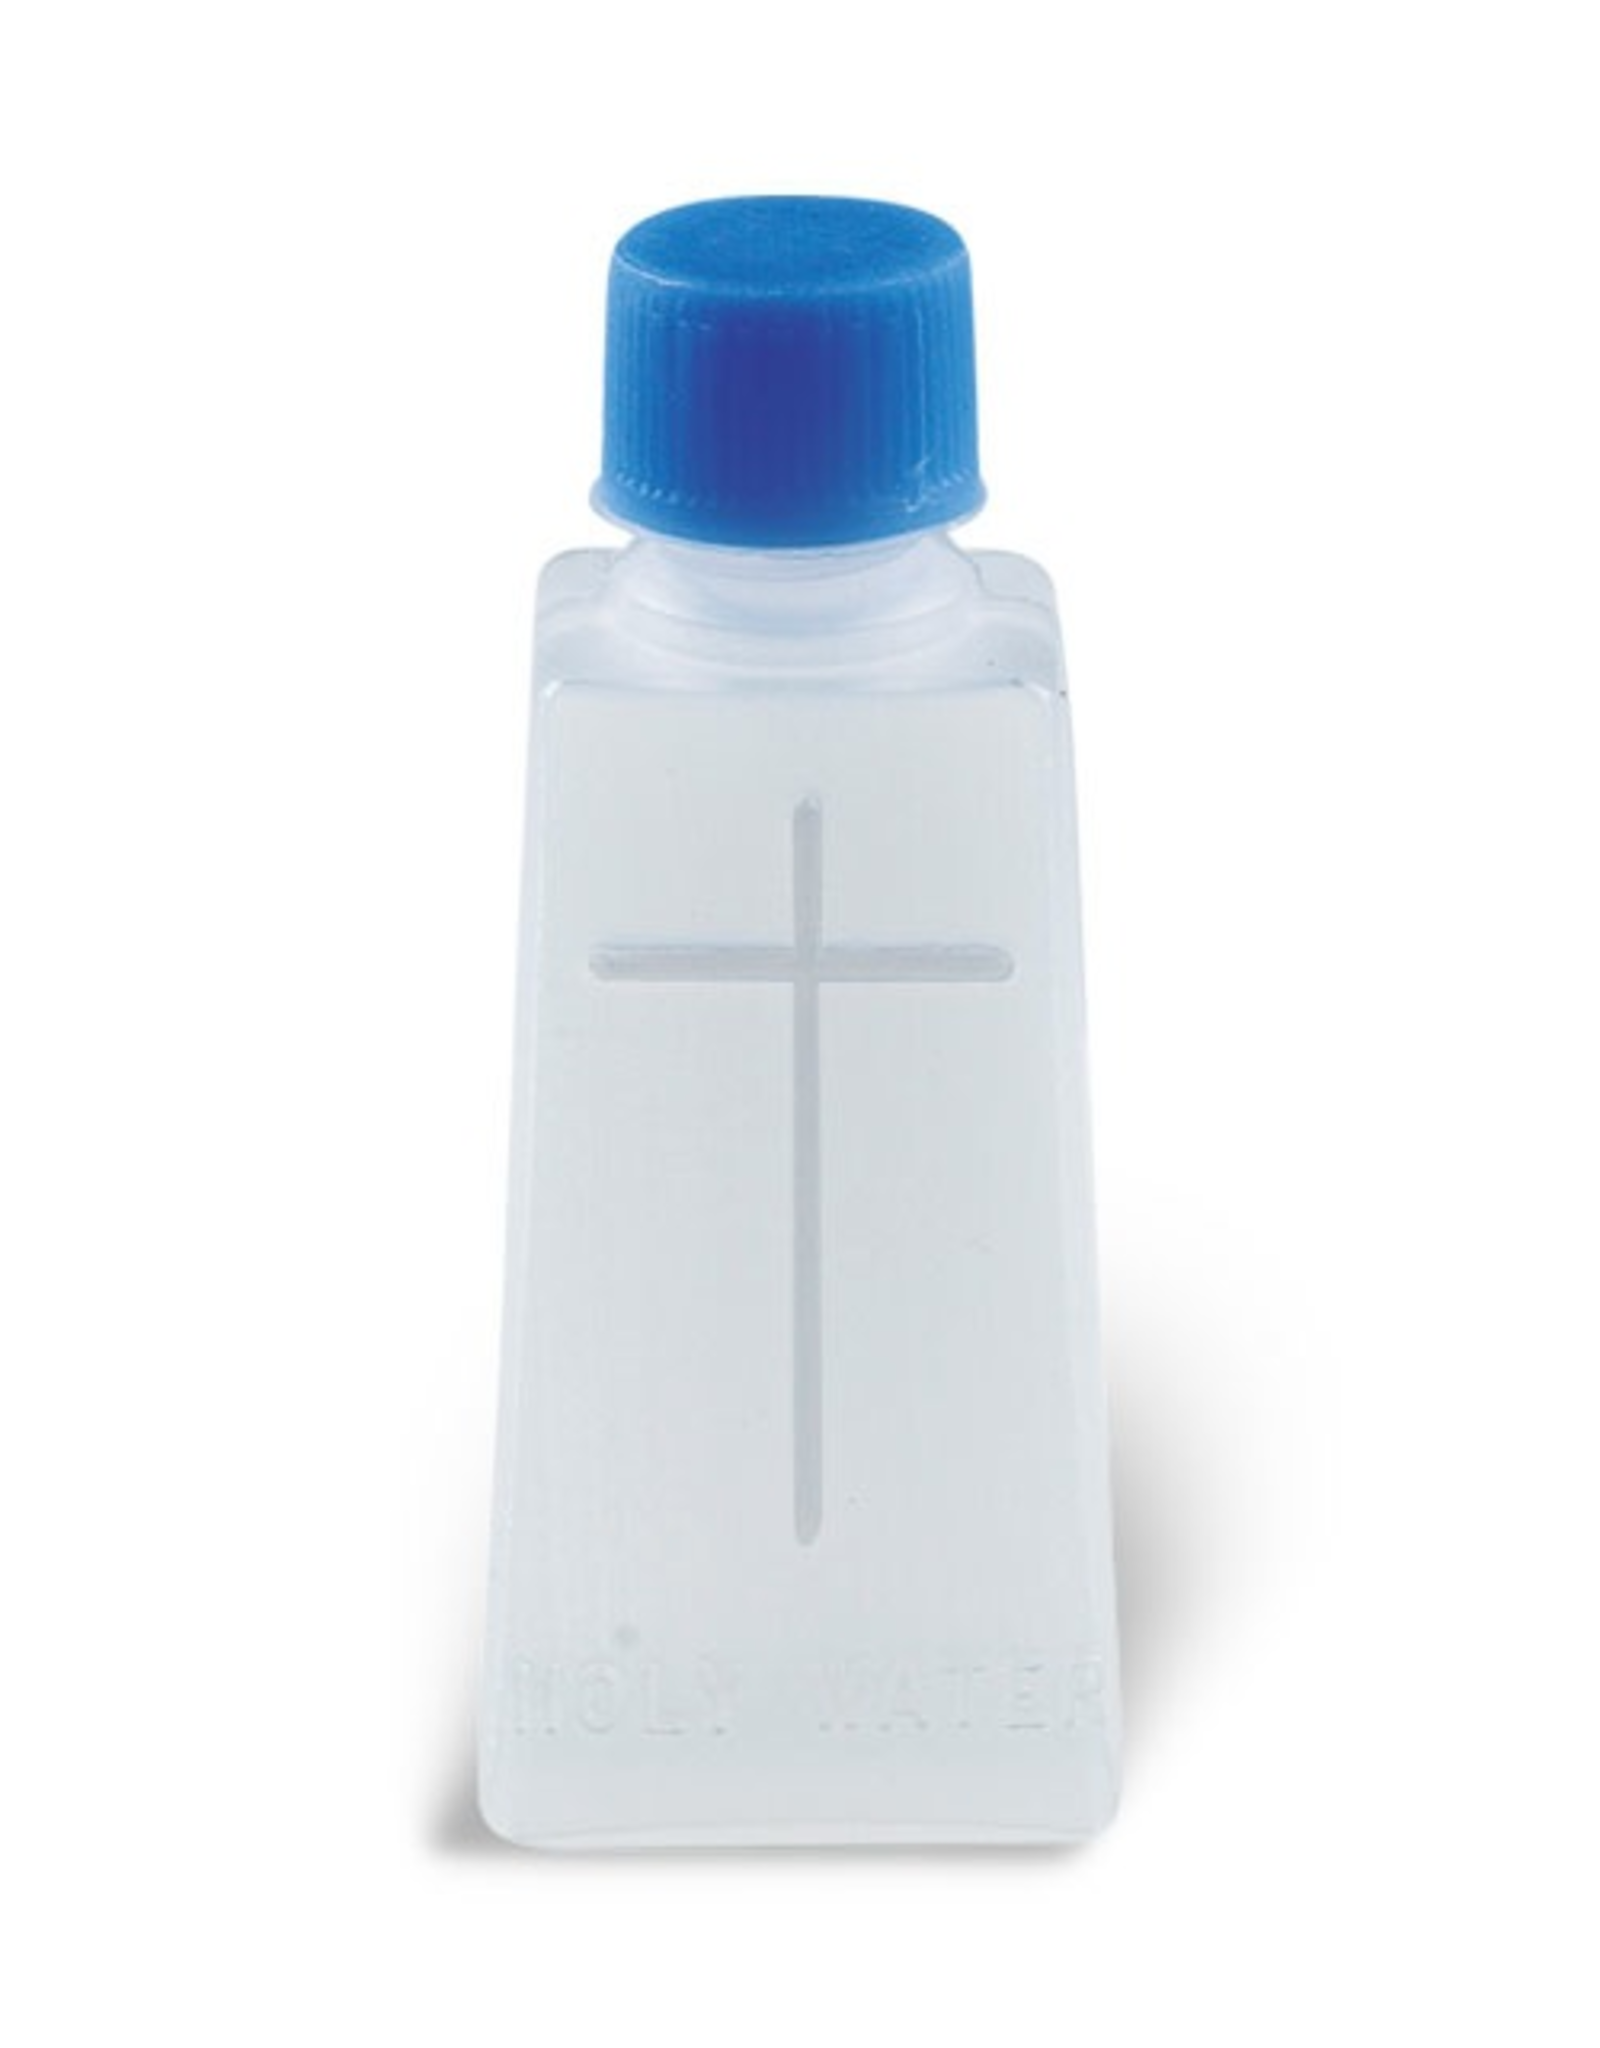 WJ Hirten 1 oz Holy Water Bottle